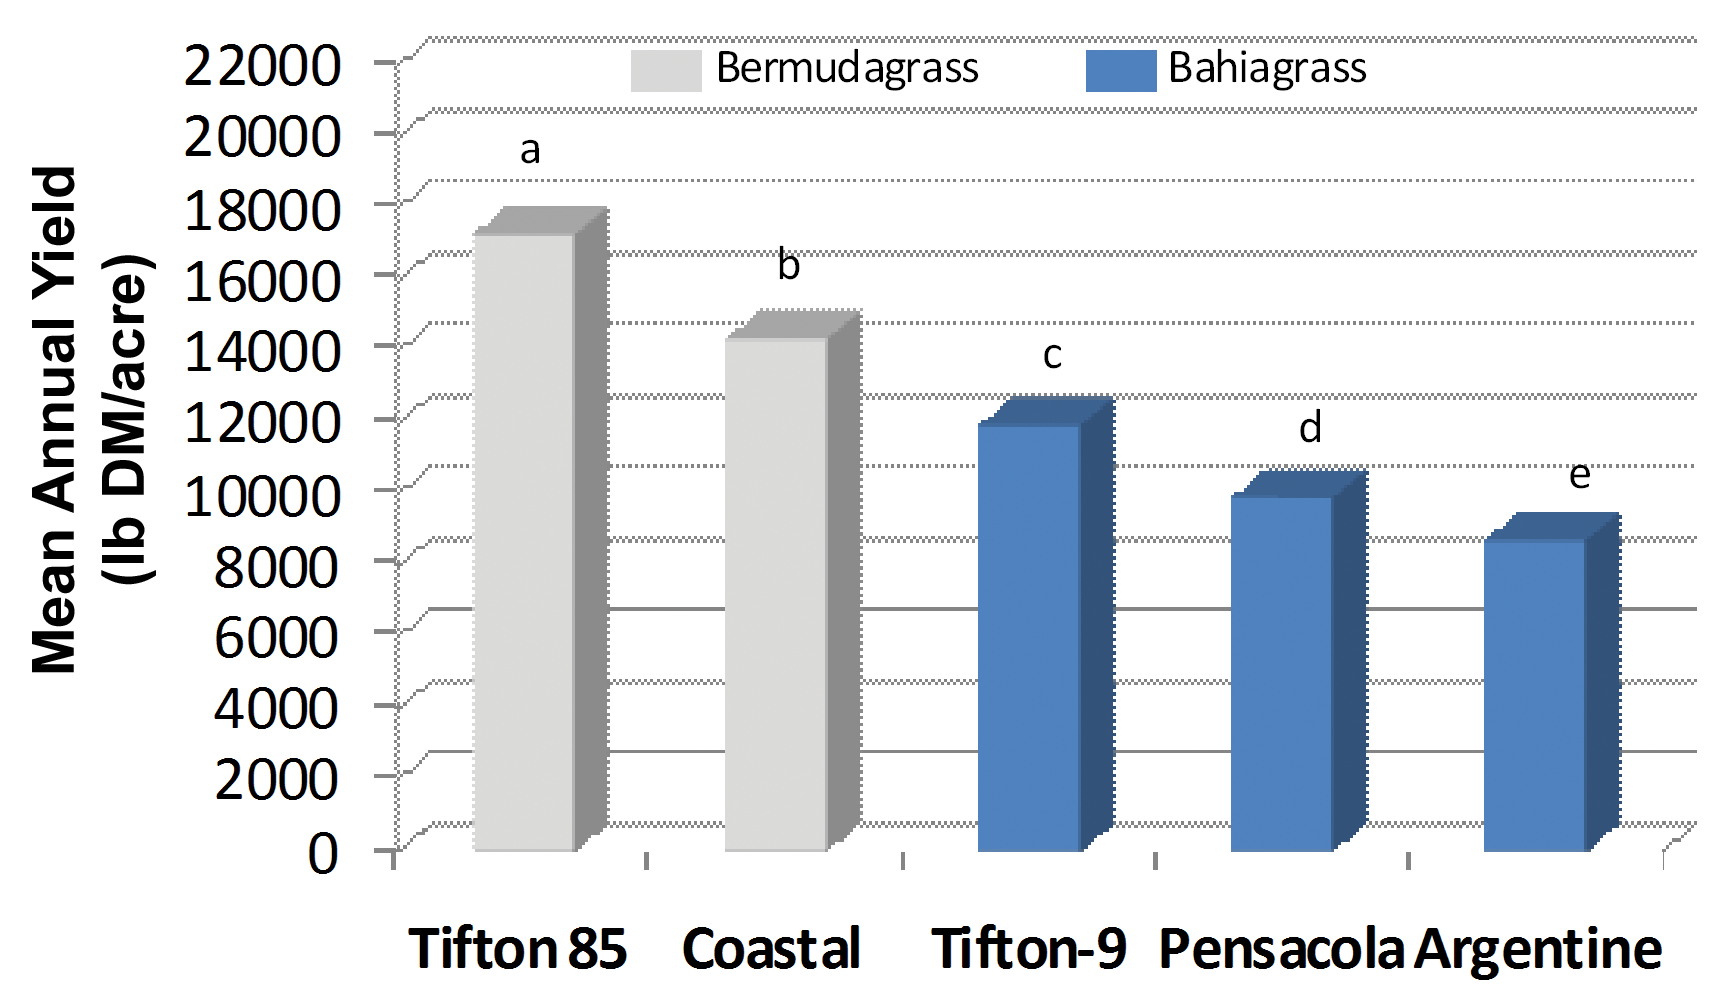 Average yield of bermudagrass varieties Tifton 85 and Coastal, and bahiagrass varieties Tifton-9, Pensacola, and Argentine.